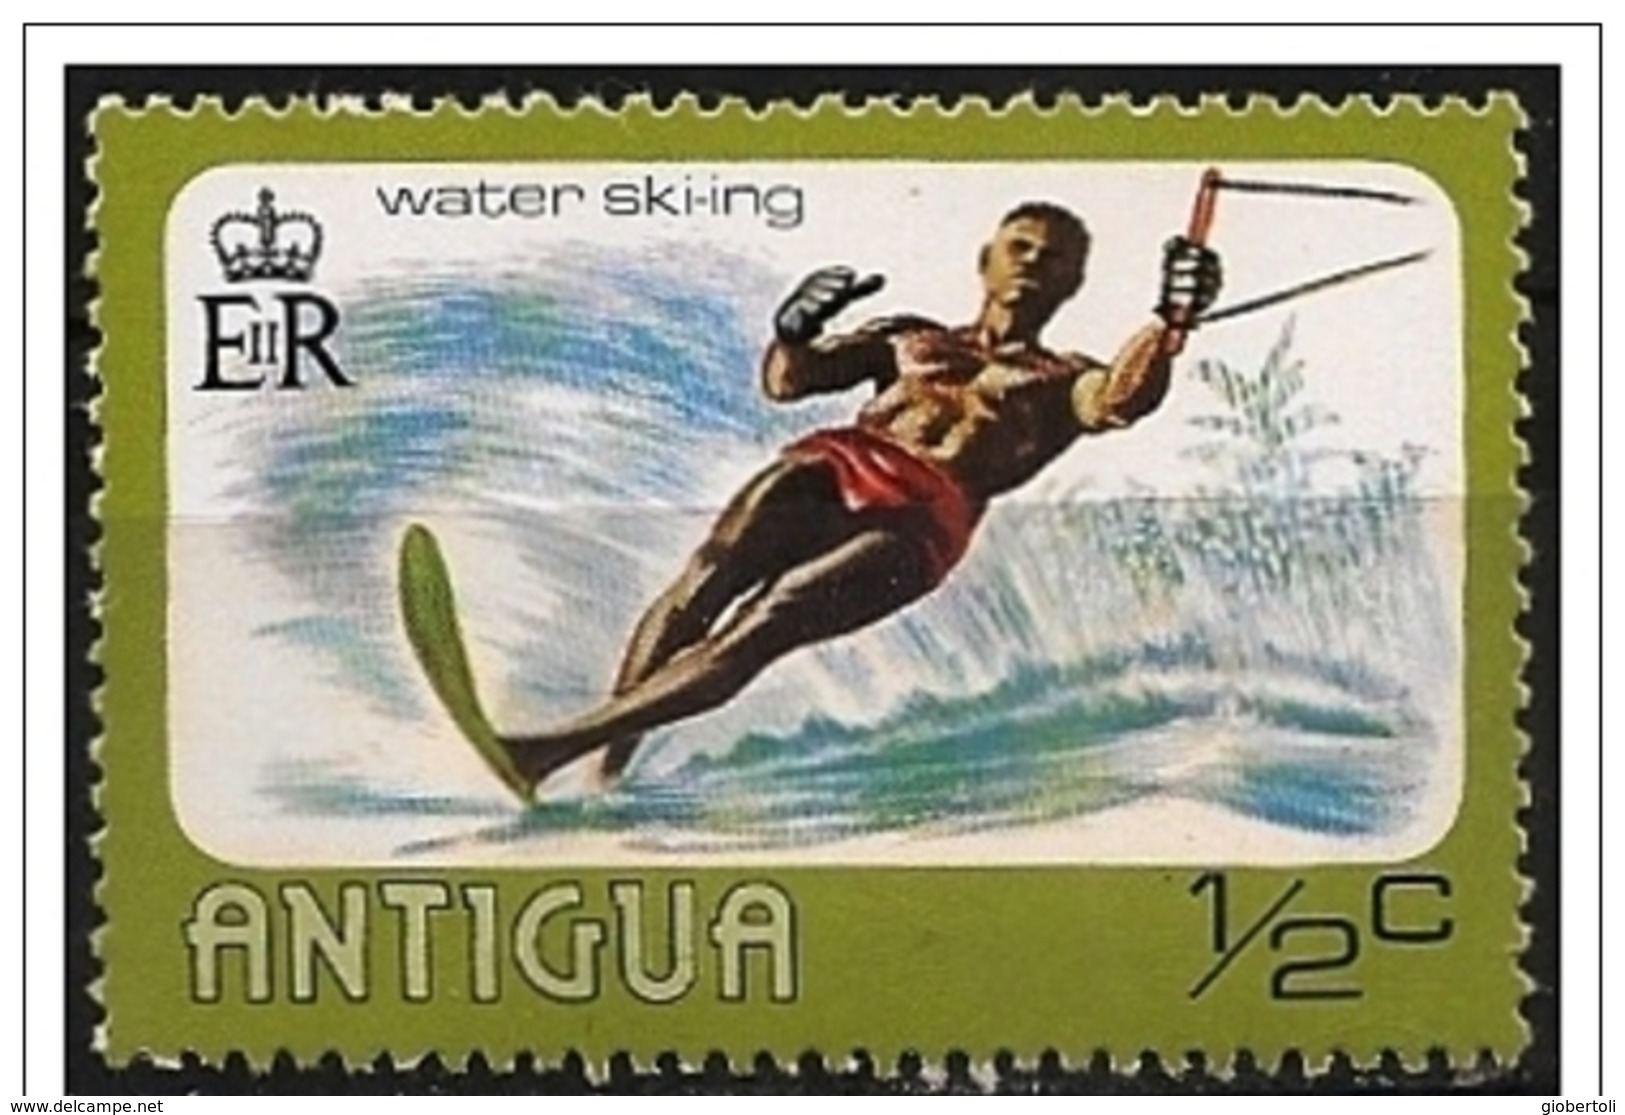 Antigua: Sci Nautico, Water Skiing, Ski Nautique - Waterski